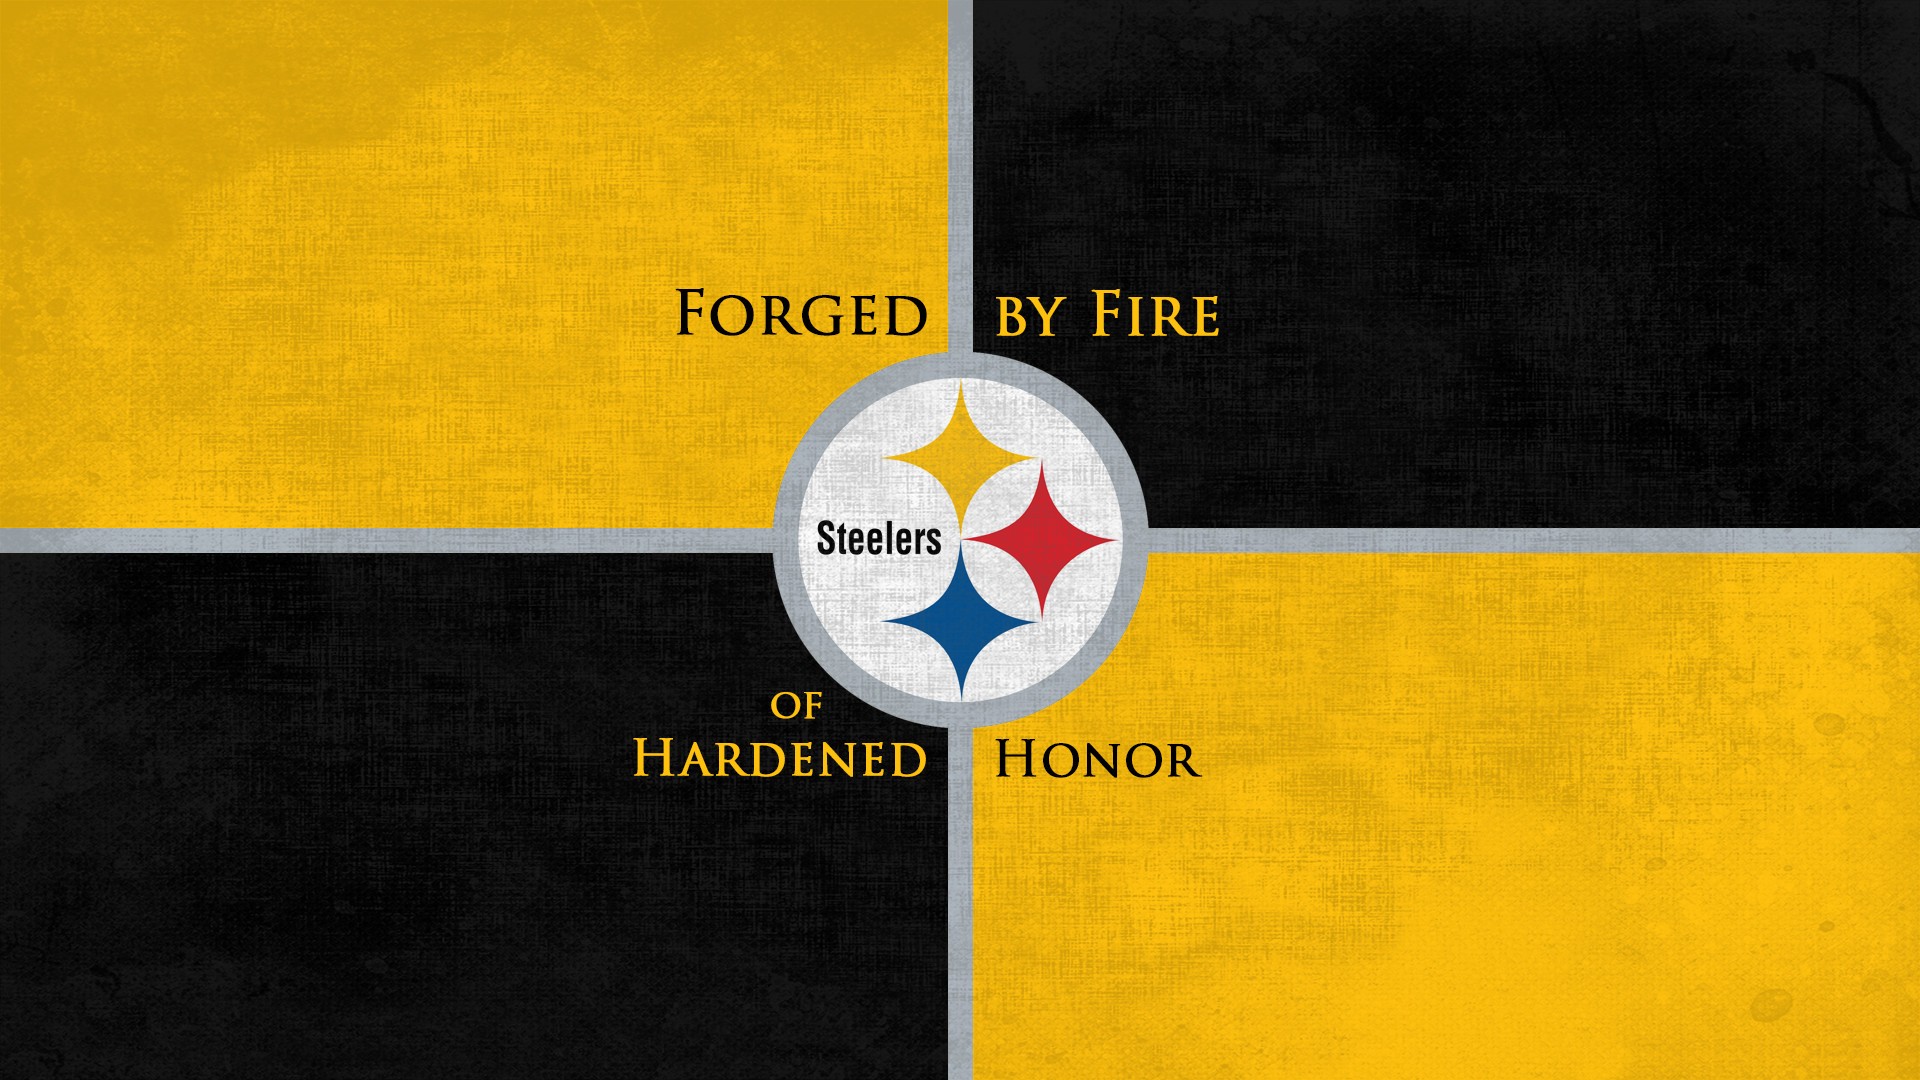 Steelers Logo For PC Wallpaper NFL Football Wallpaper